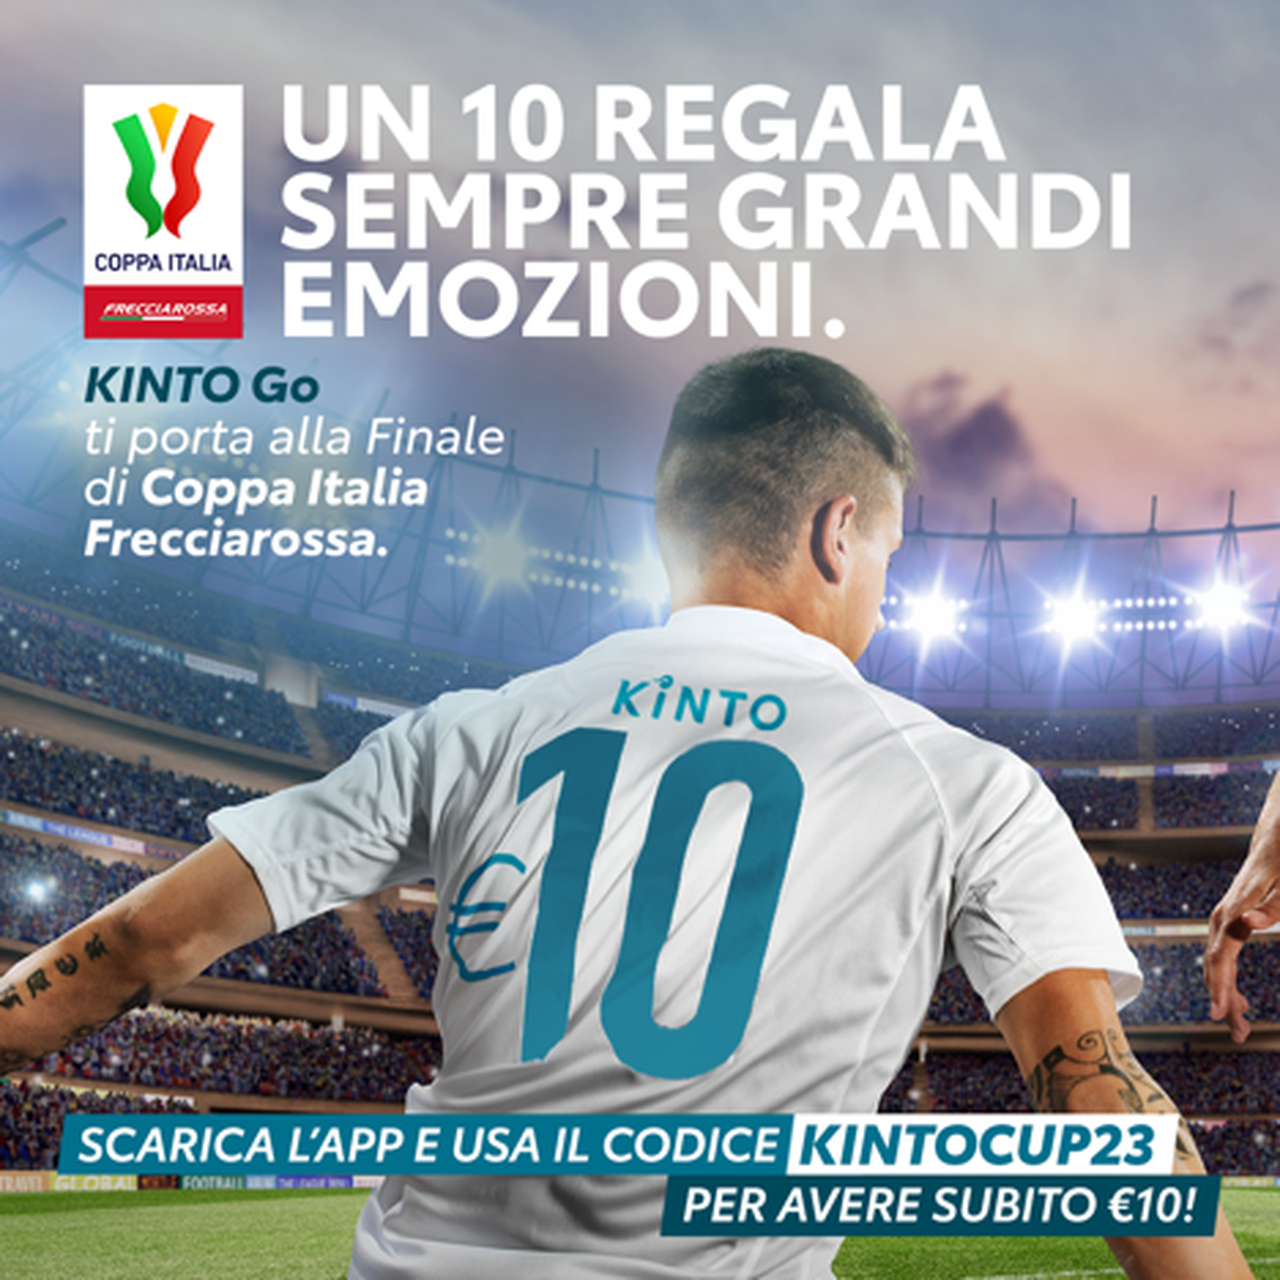 Kinto Official Mobility Partner Lega Serie A